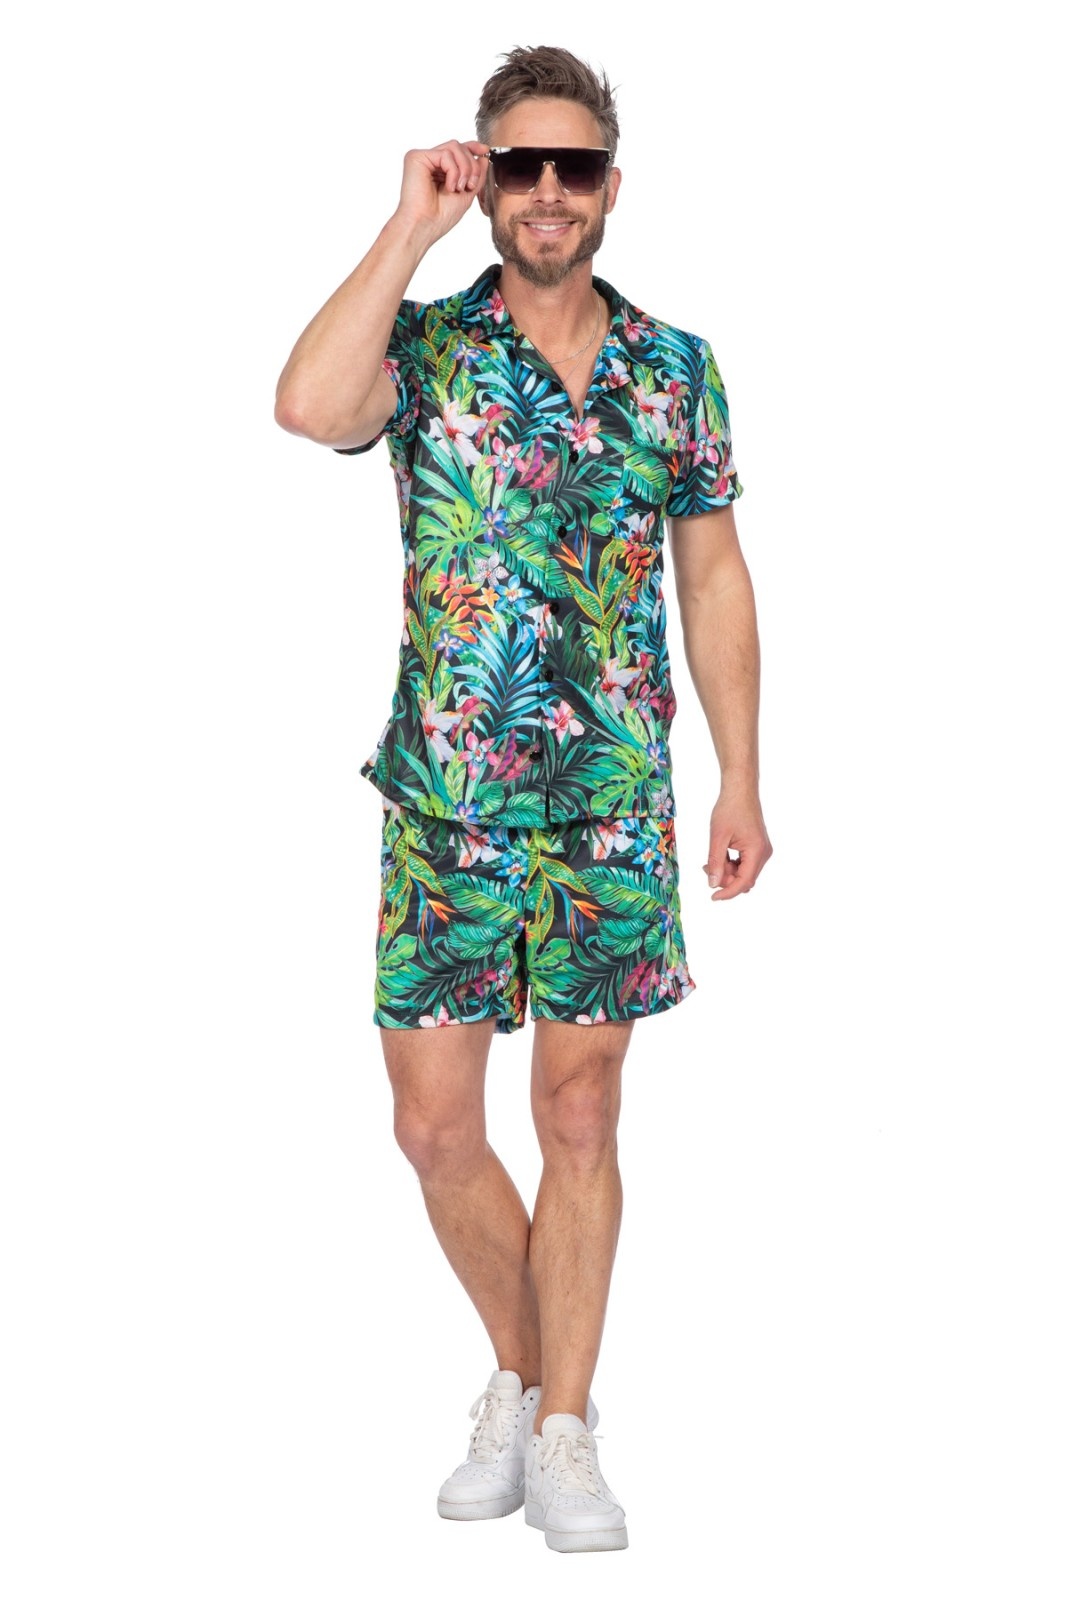 Wilbers - Hawaii & Carribean & Tropisch Kostuum - Hawaii Harrie Op Het Strand - Man - groen,zwart - XL - Carnavalskleding - Verkleedkleding